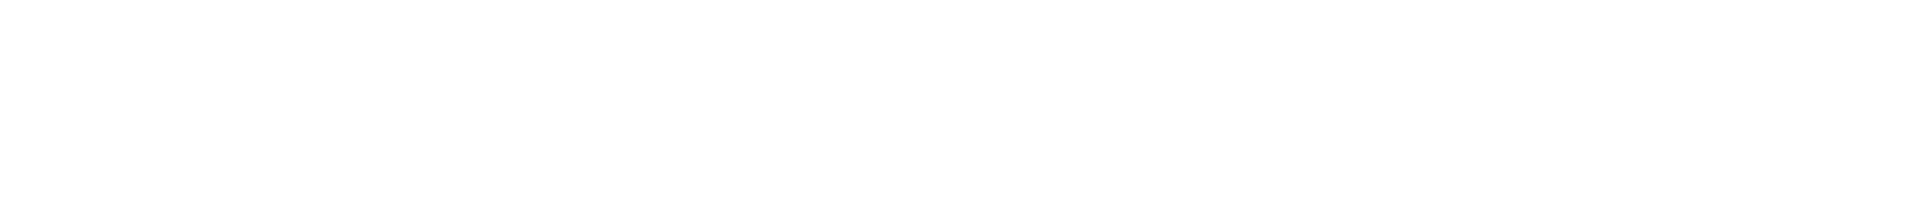 James Werner II Painting - logo